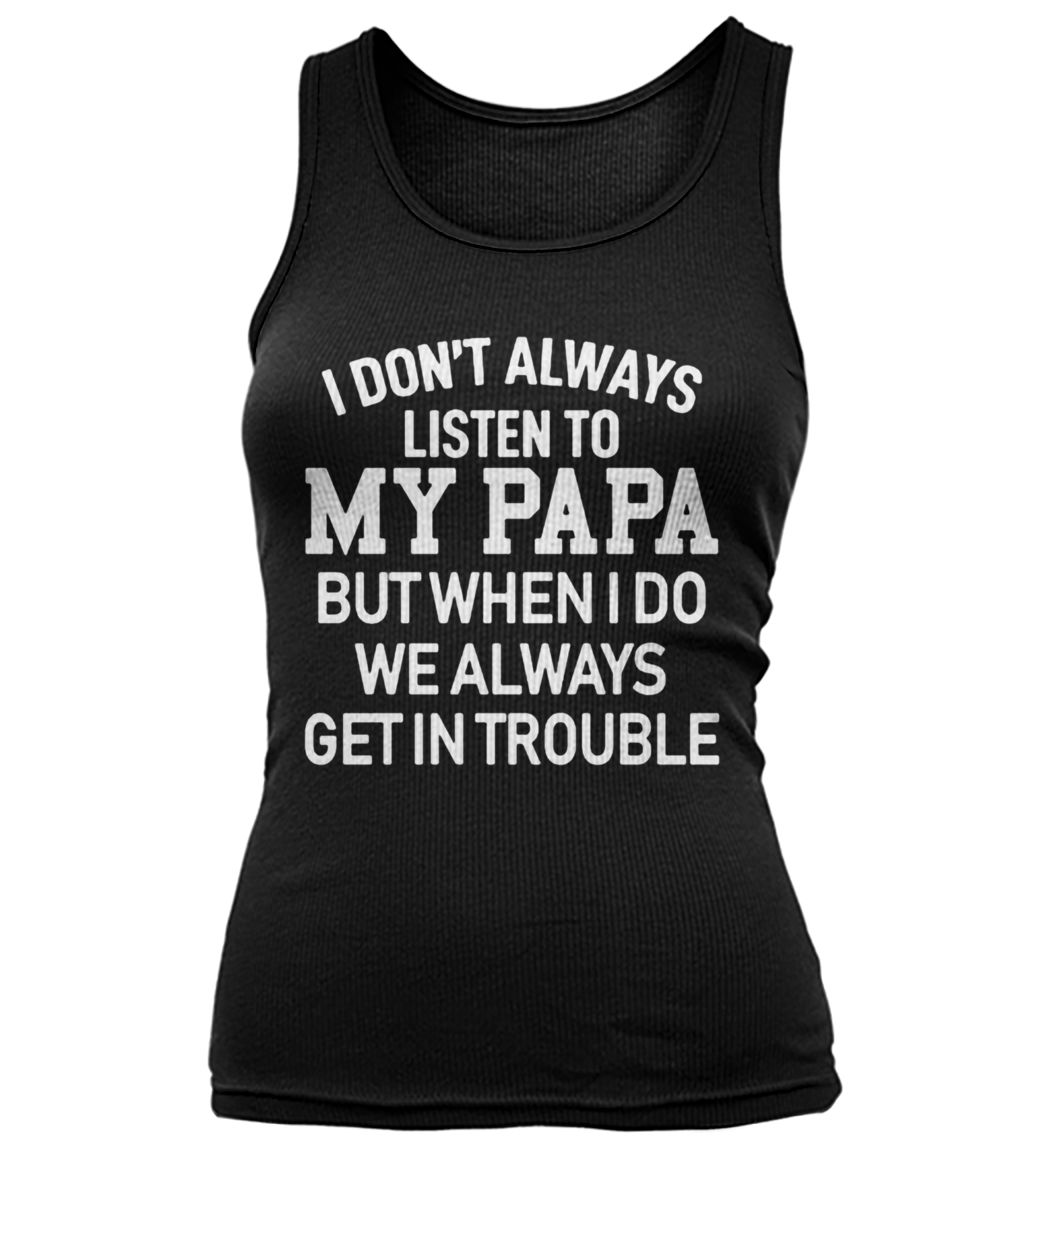 I don't always listen to my papa women's tank top